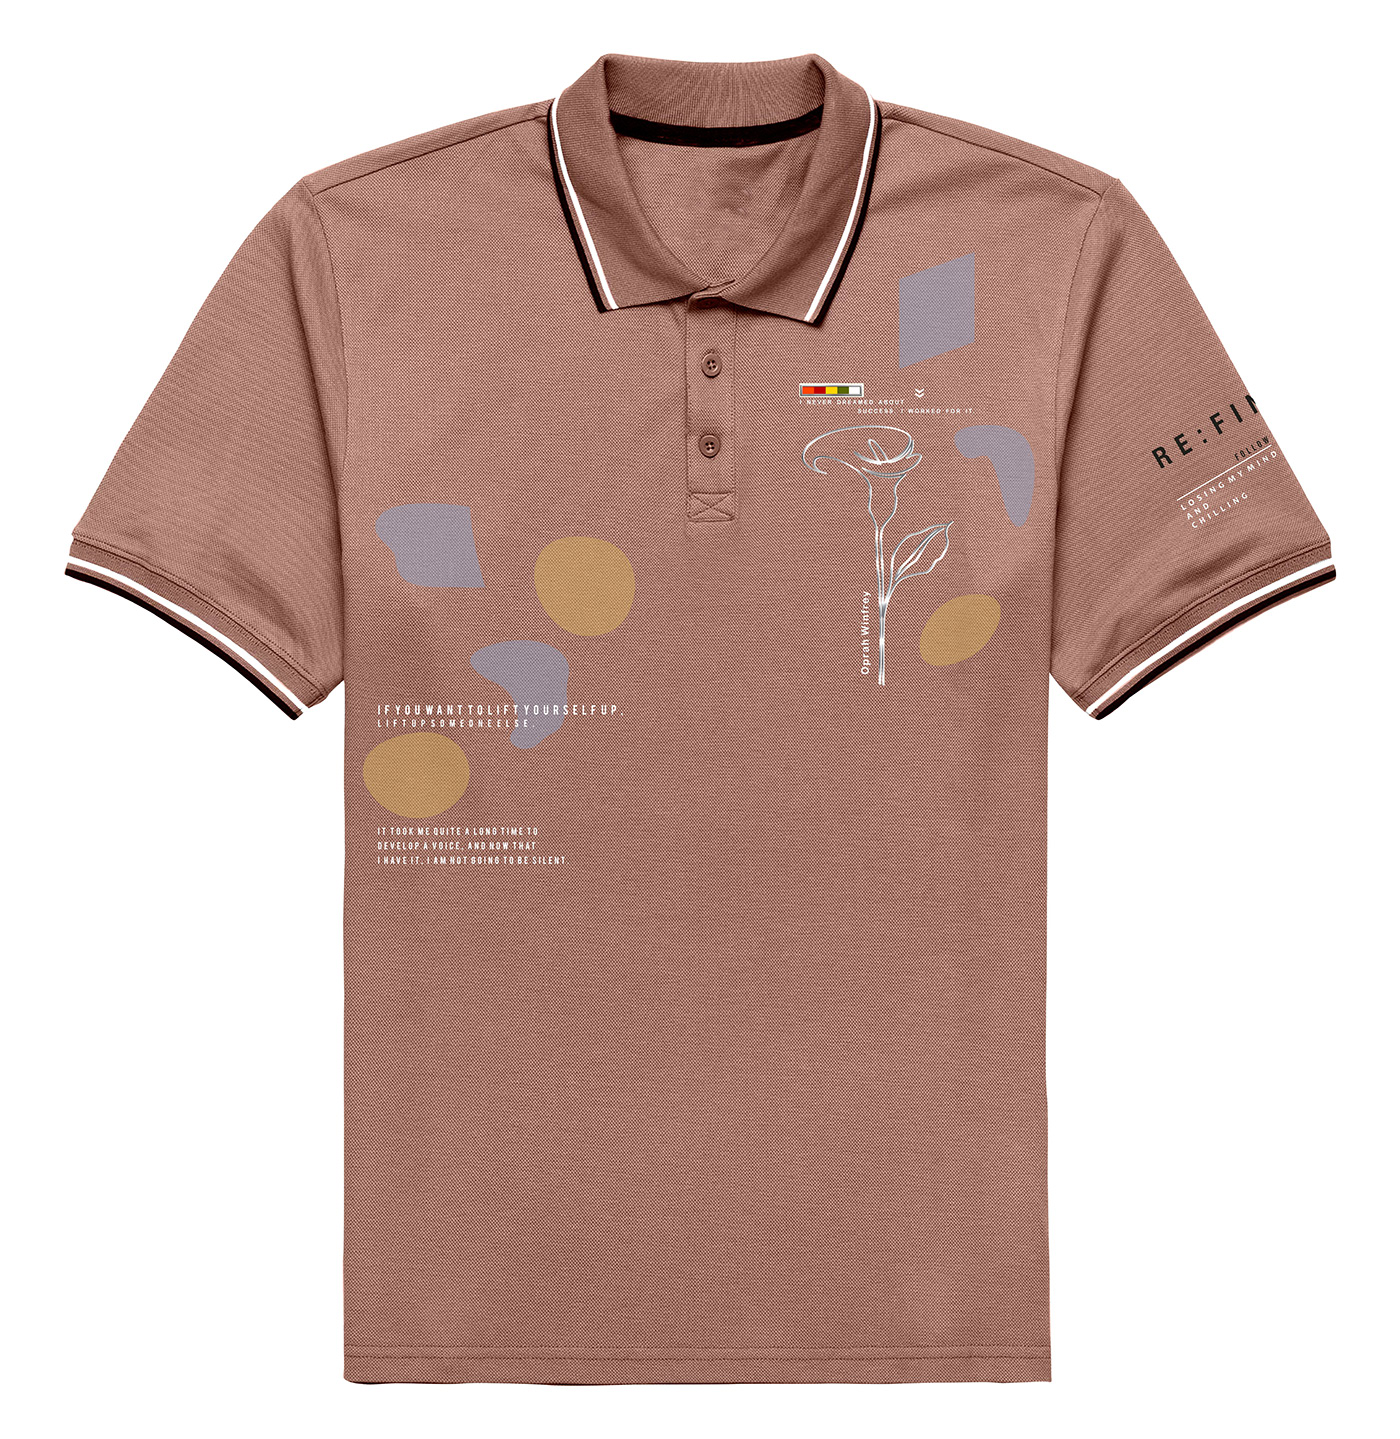 Clothing polo shirt Fashion  apparel modern Authentic summer